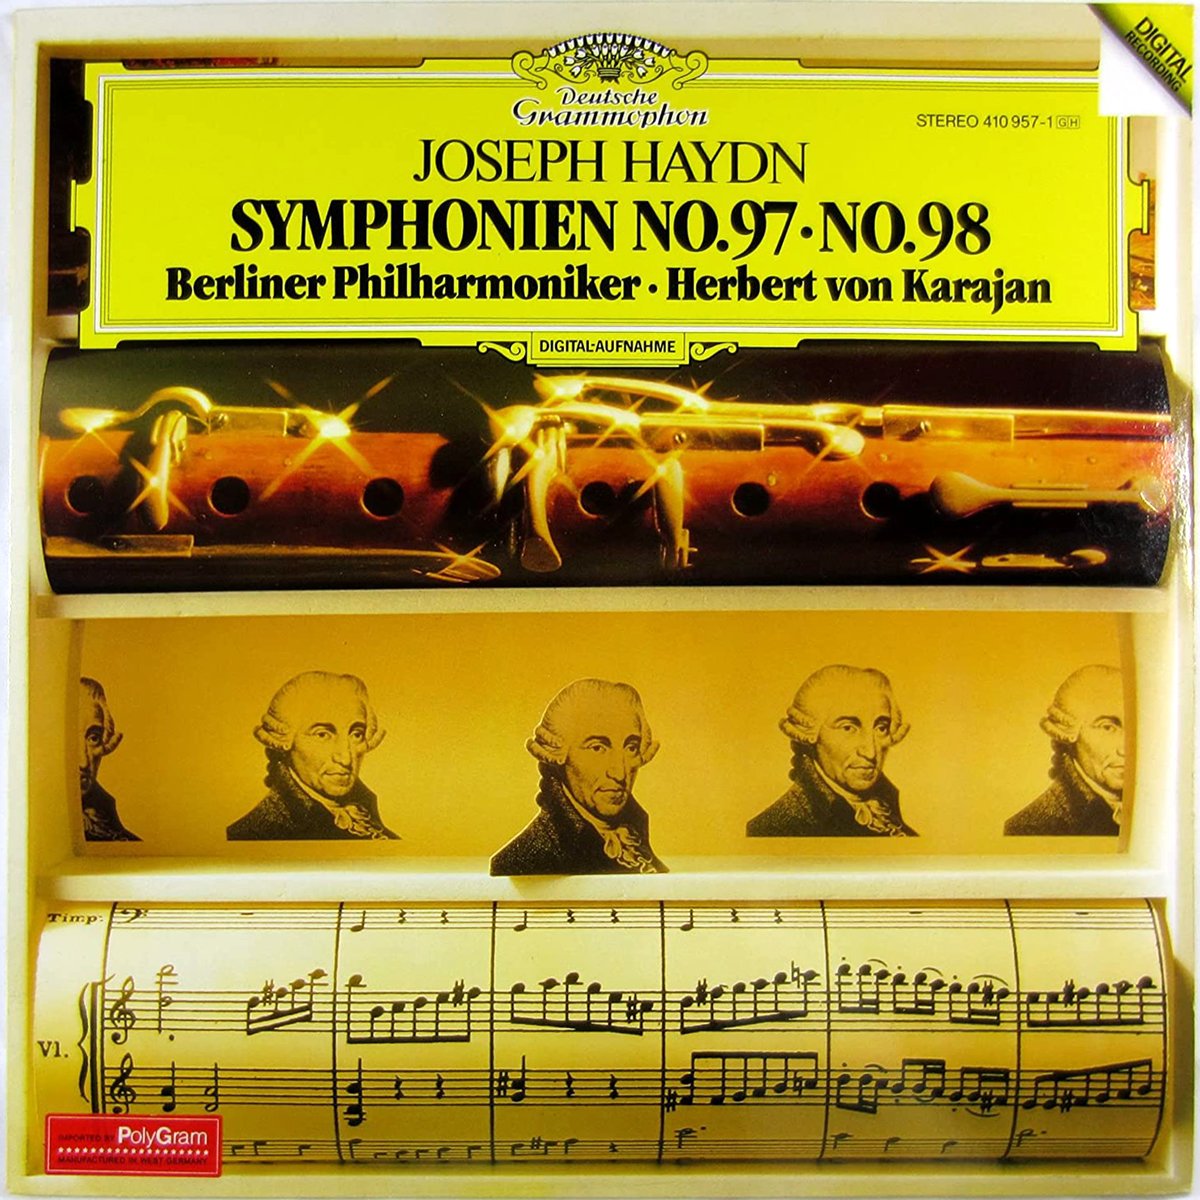 DGG 410 957 Haydn Symphonies 97 98 Karajan DGG Digital Aufnahme